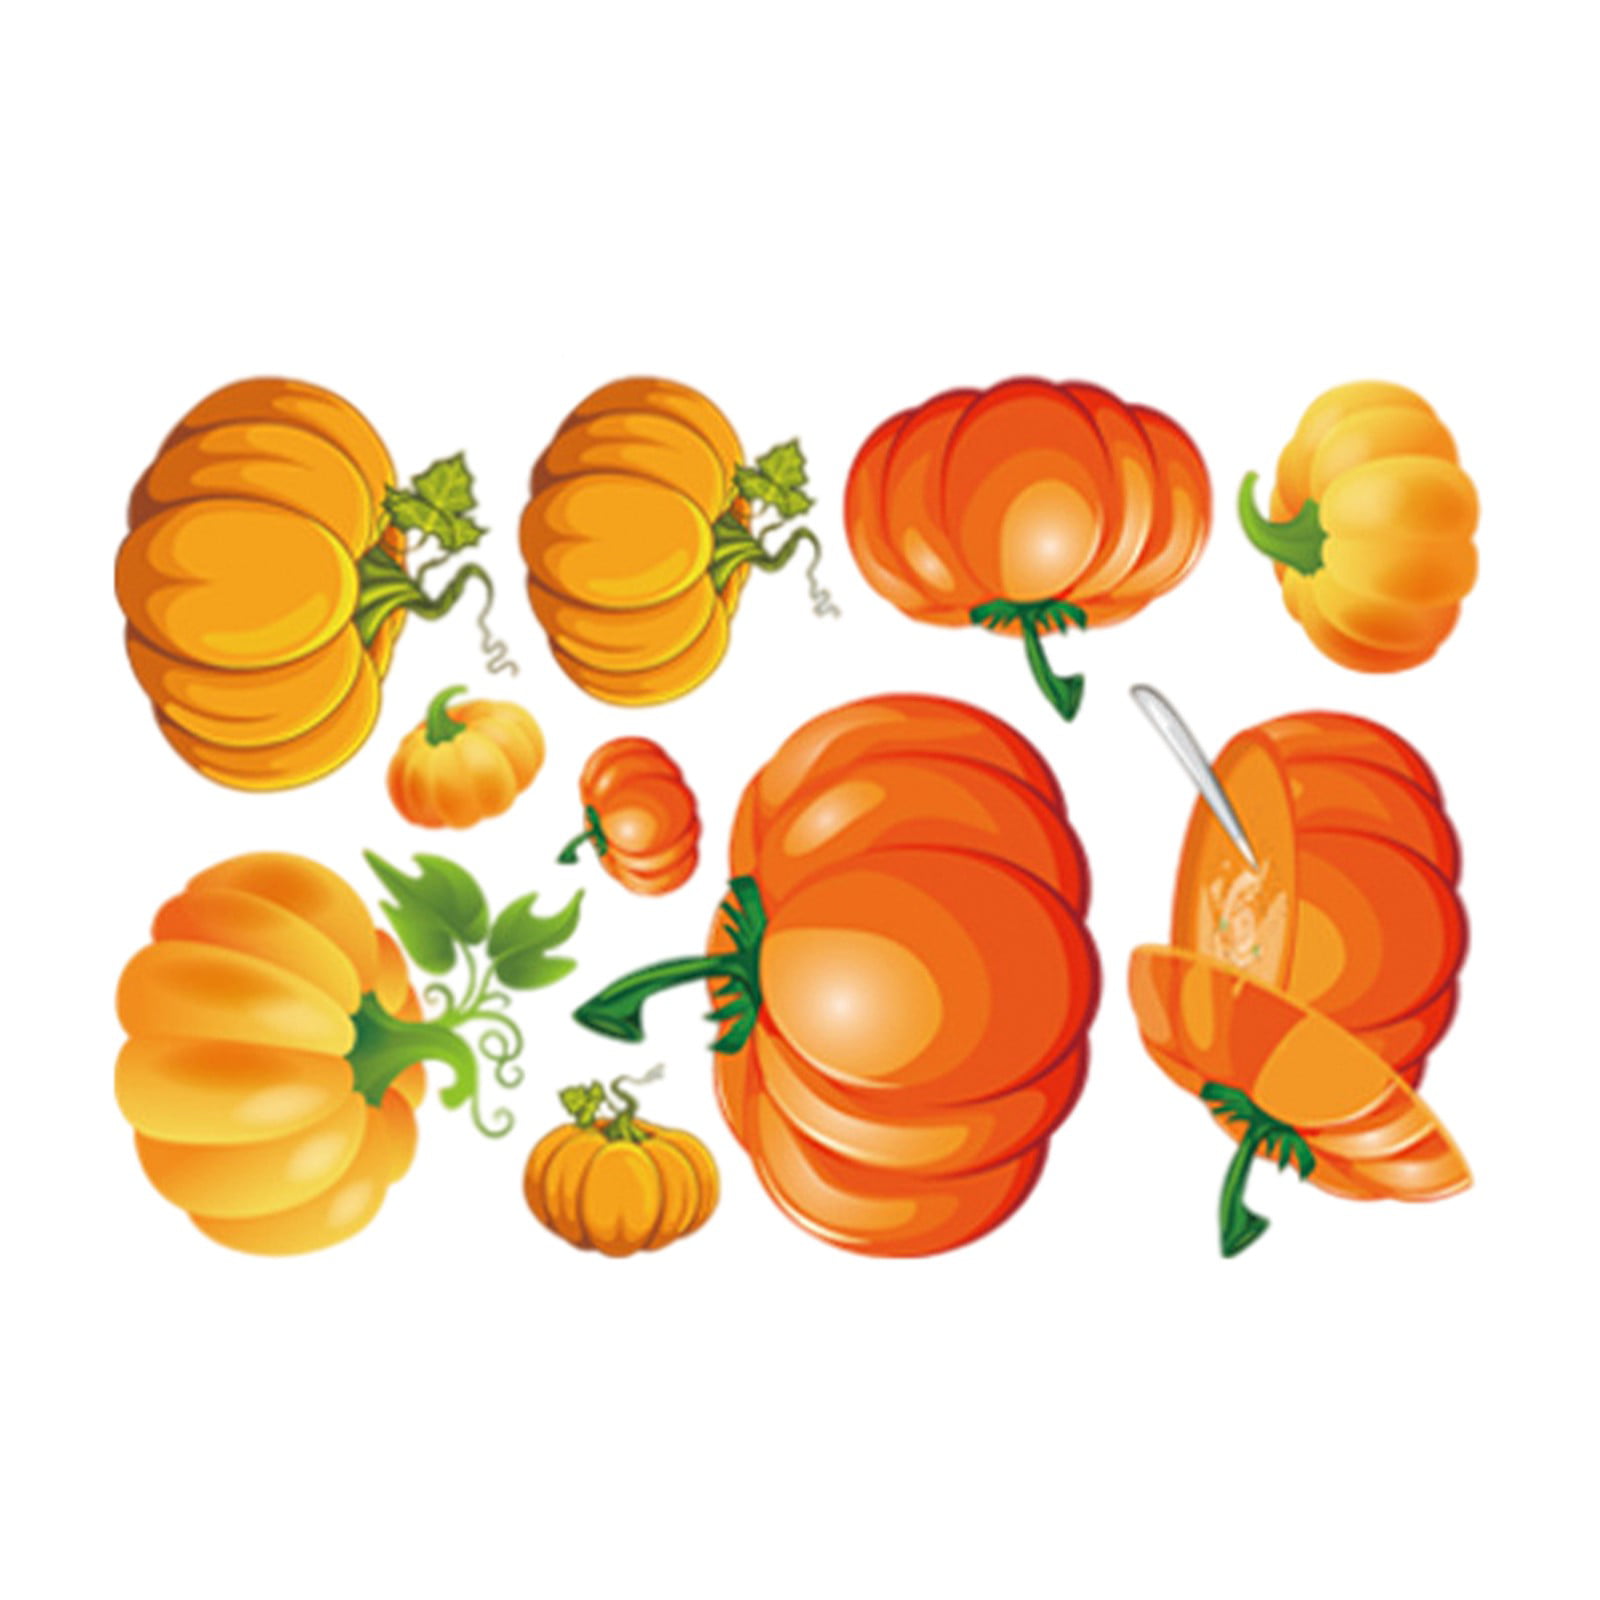 Fall/Harvest Glitter Foam OrangePumpkin Stickers 12 pc by Creatology New 